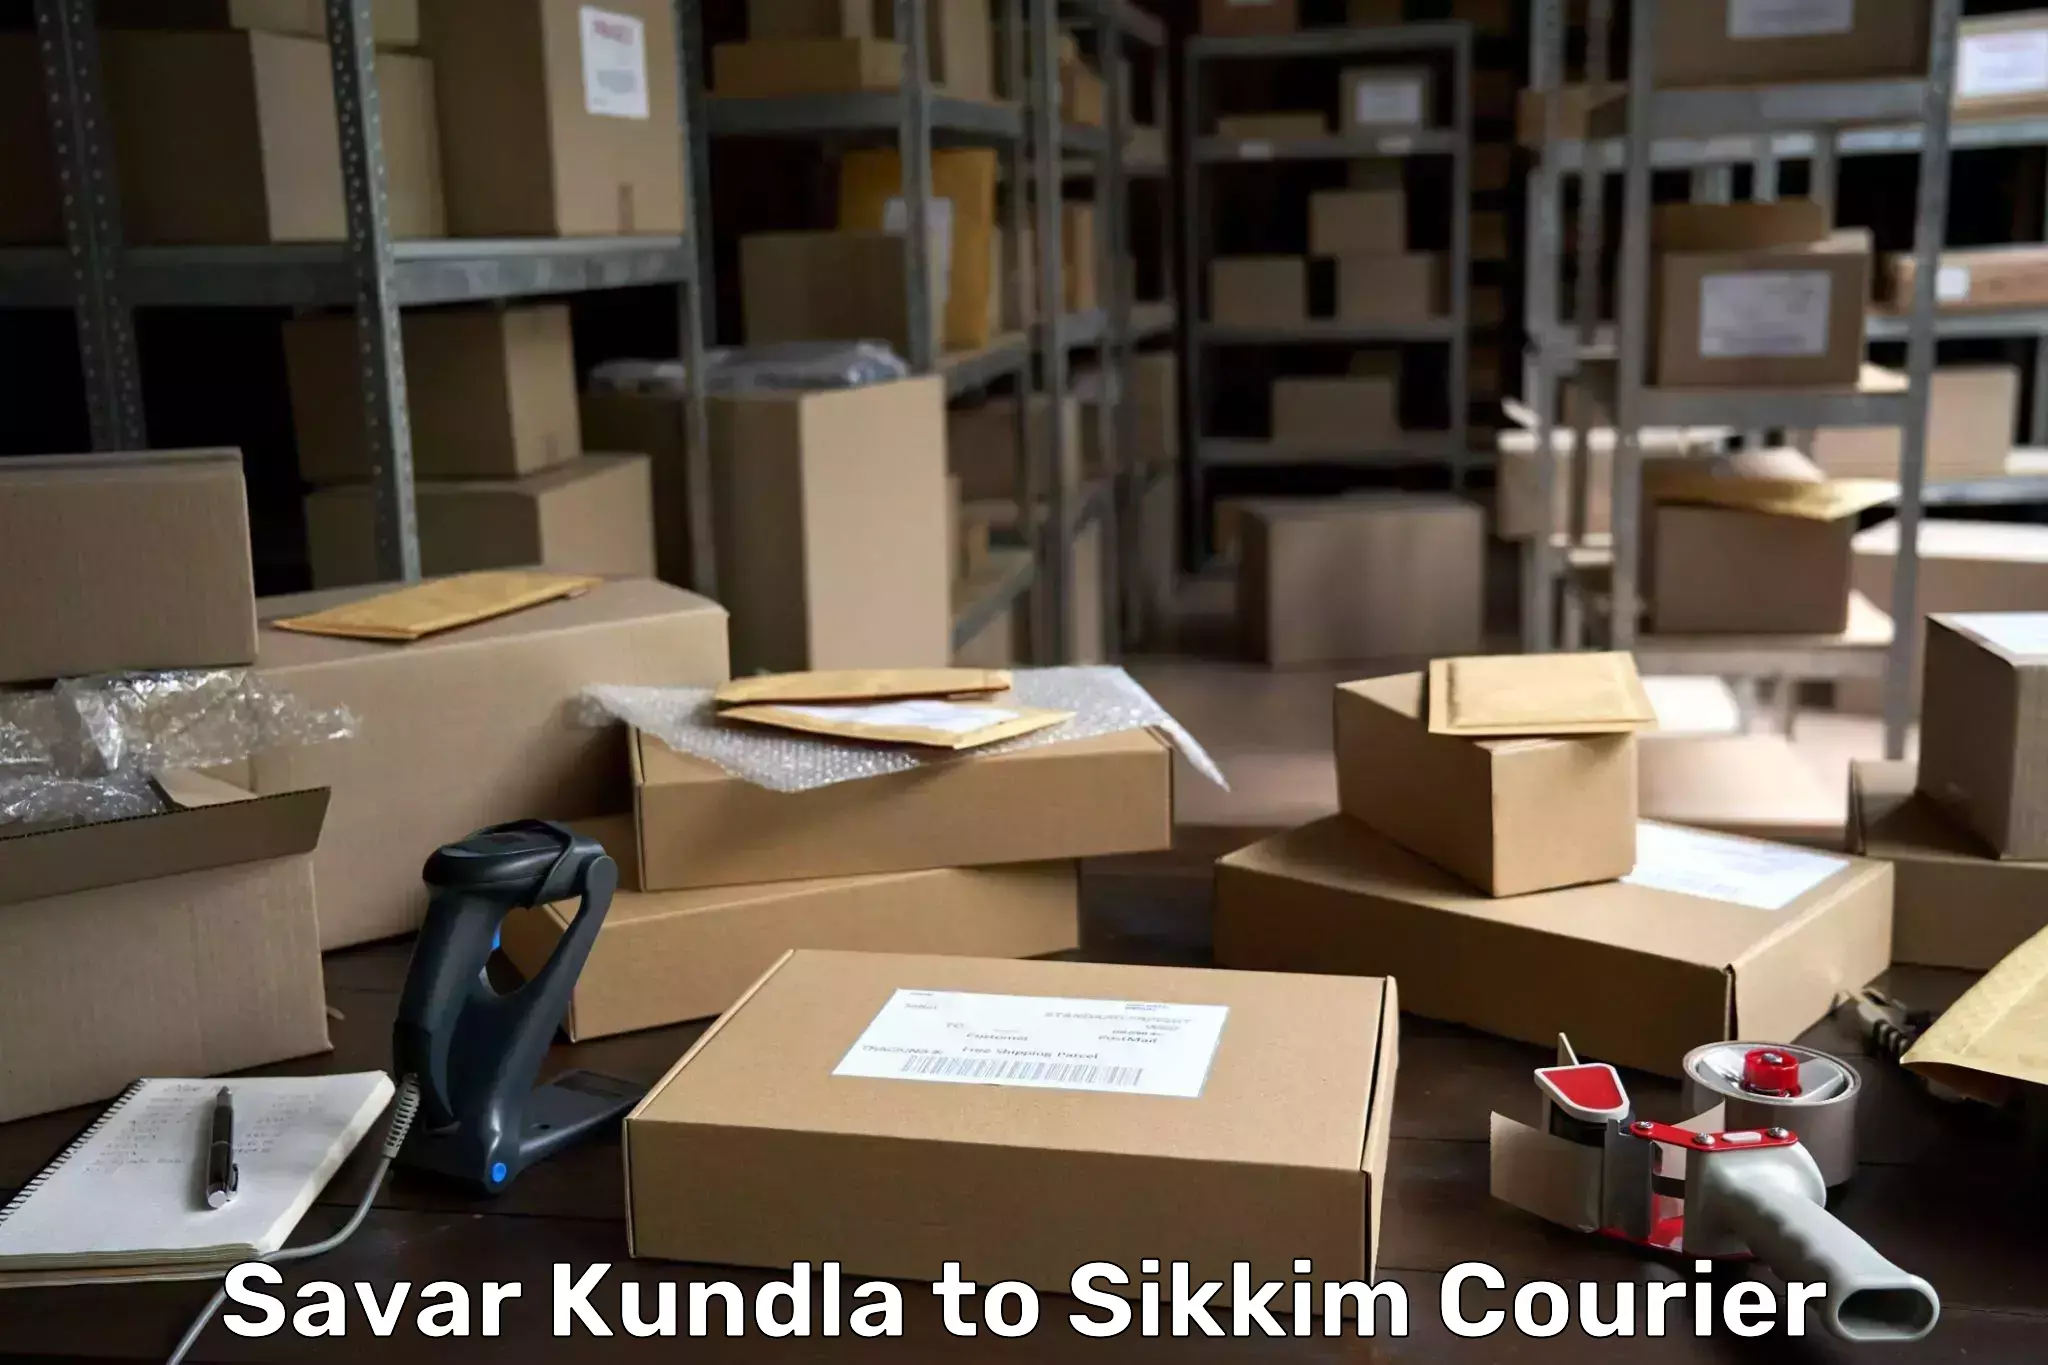 Reliable parcel services Savar Kundla to Sikkim